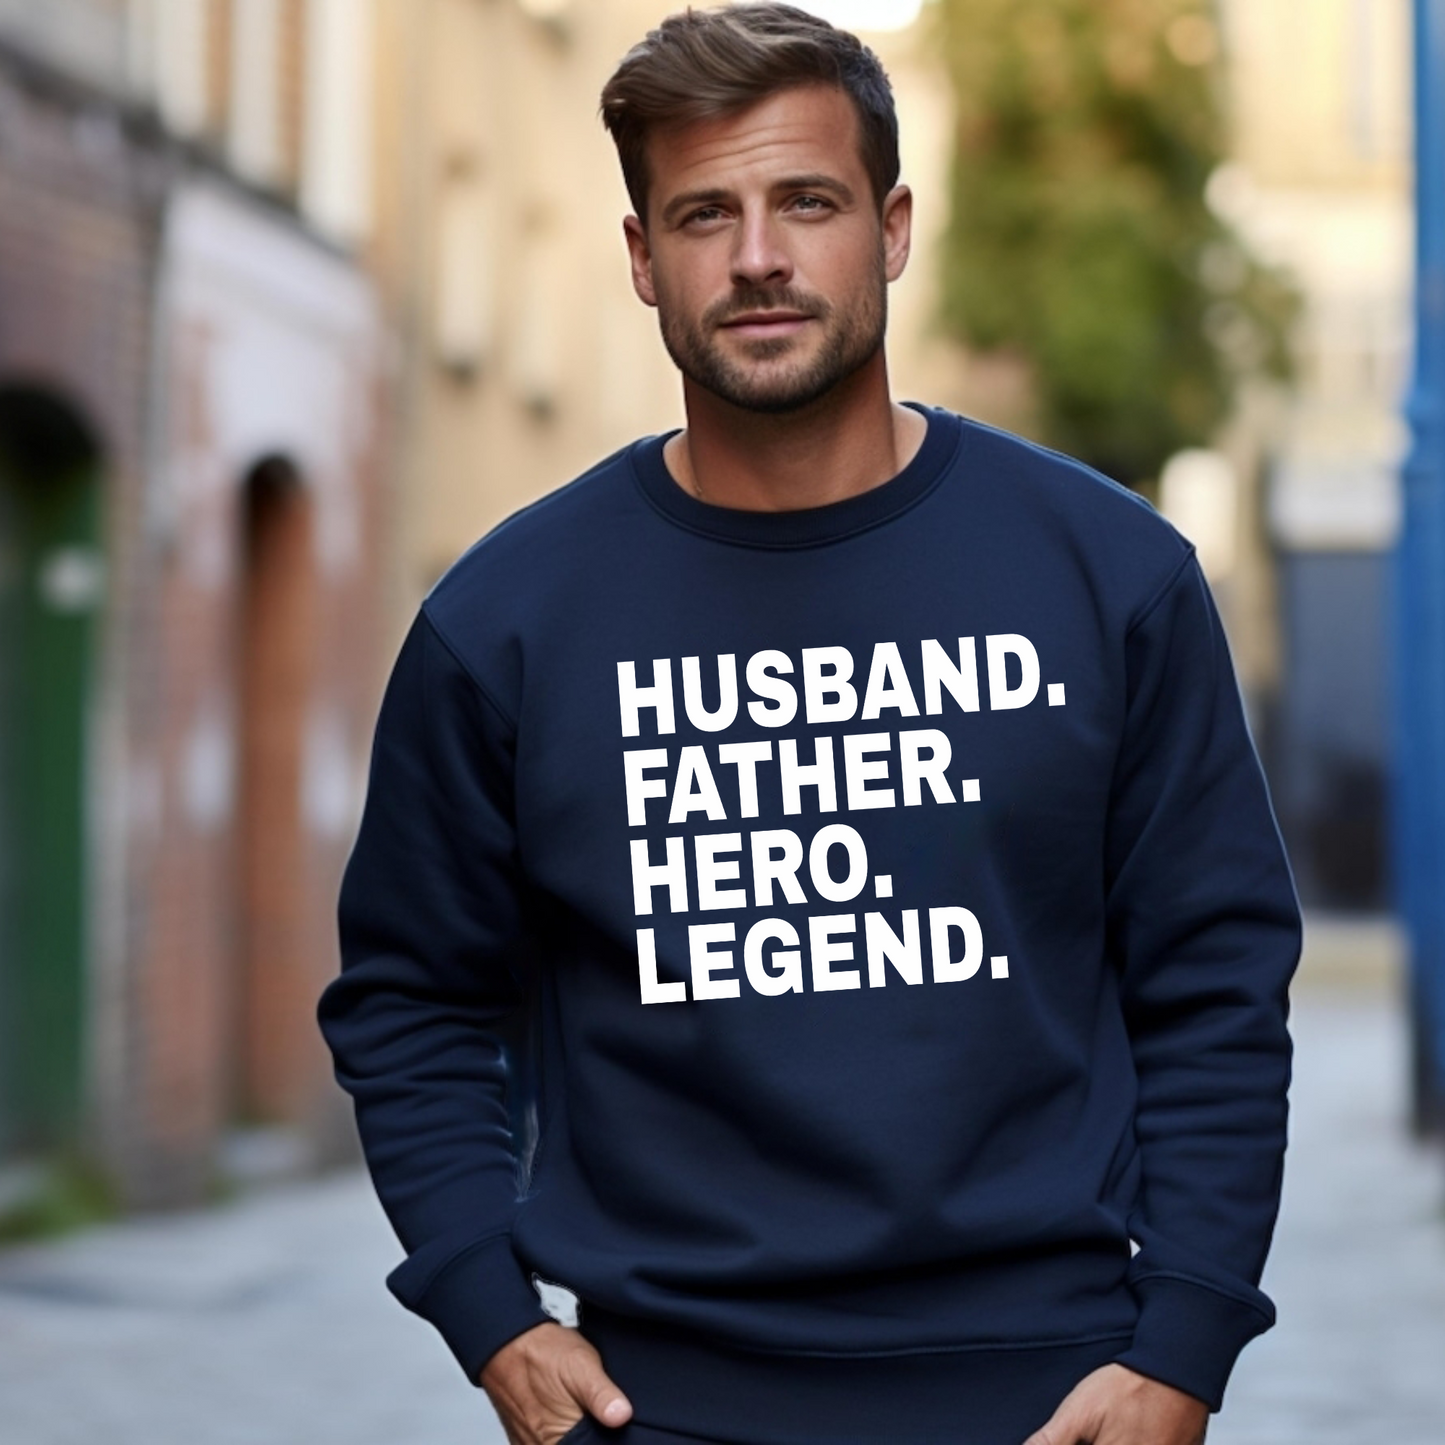 Ehemann, Vater, Held, Legende - T-Shirt für den Alltagshelden